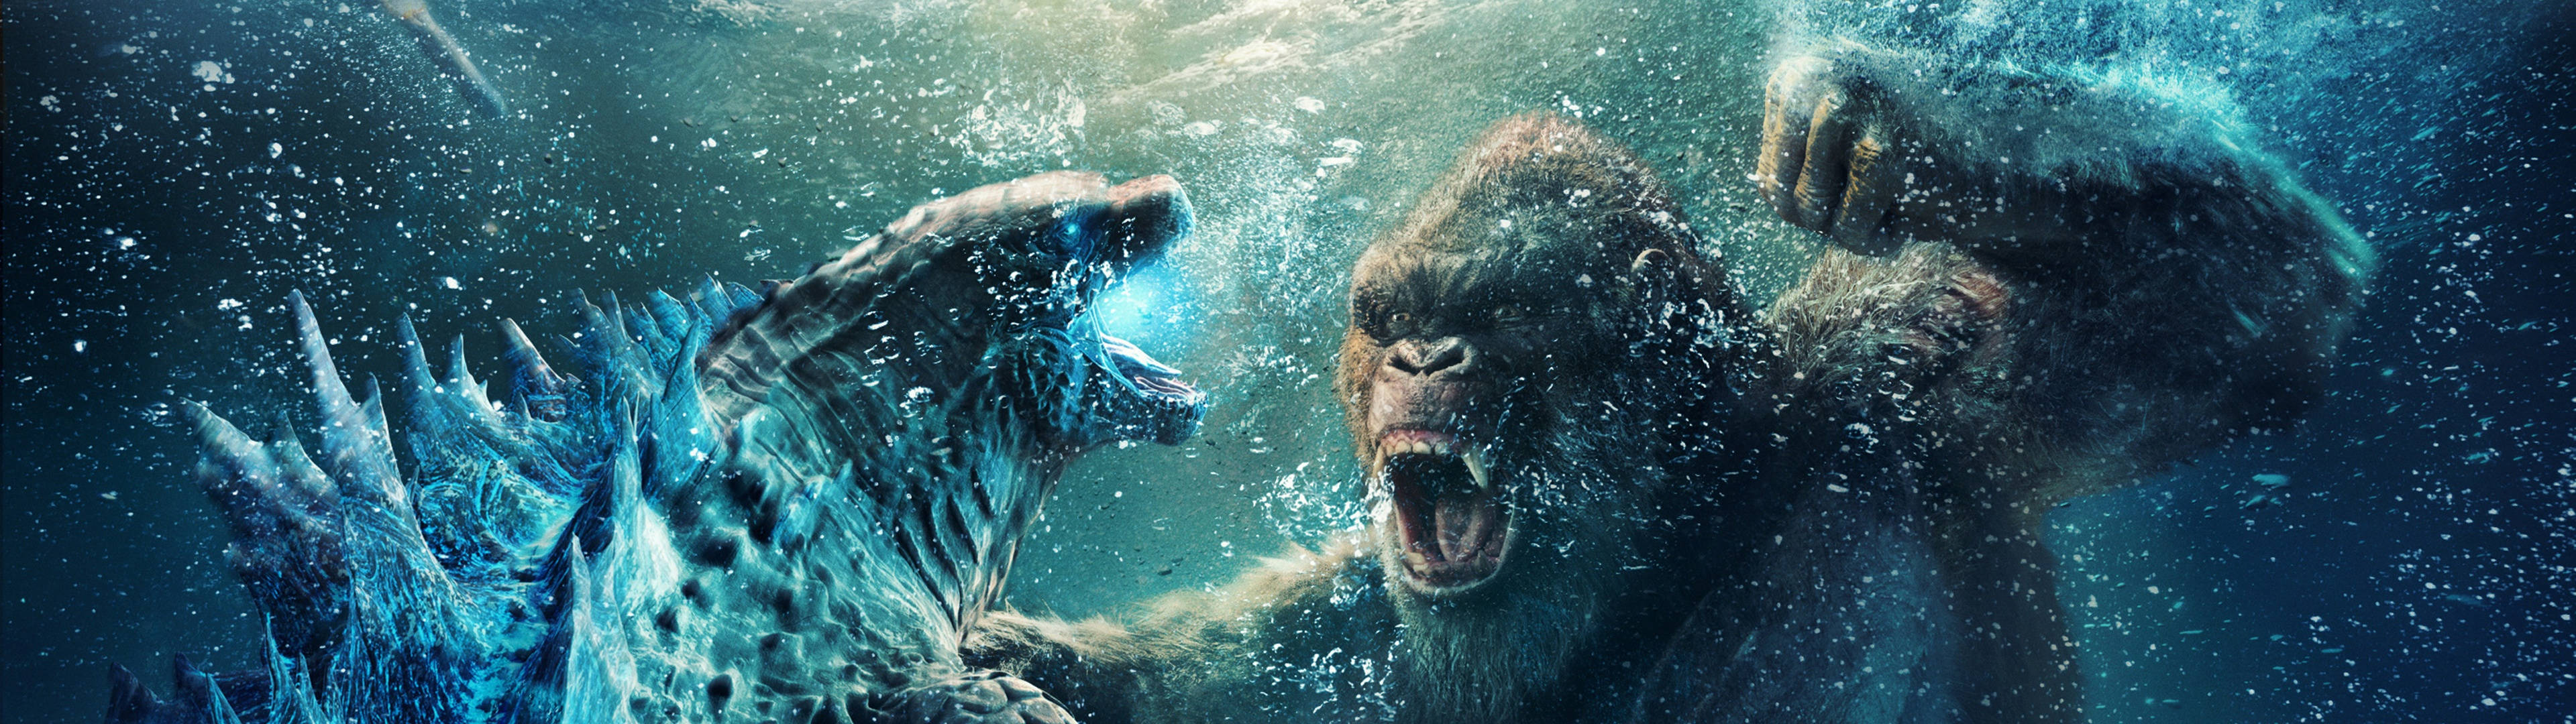 Godzillagegen King Kong - Hd 720p Wallpaper